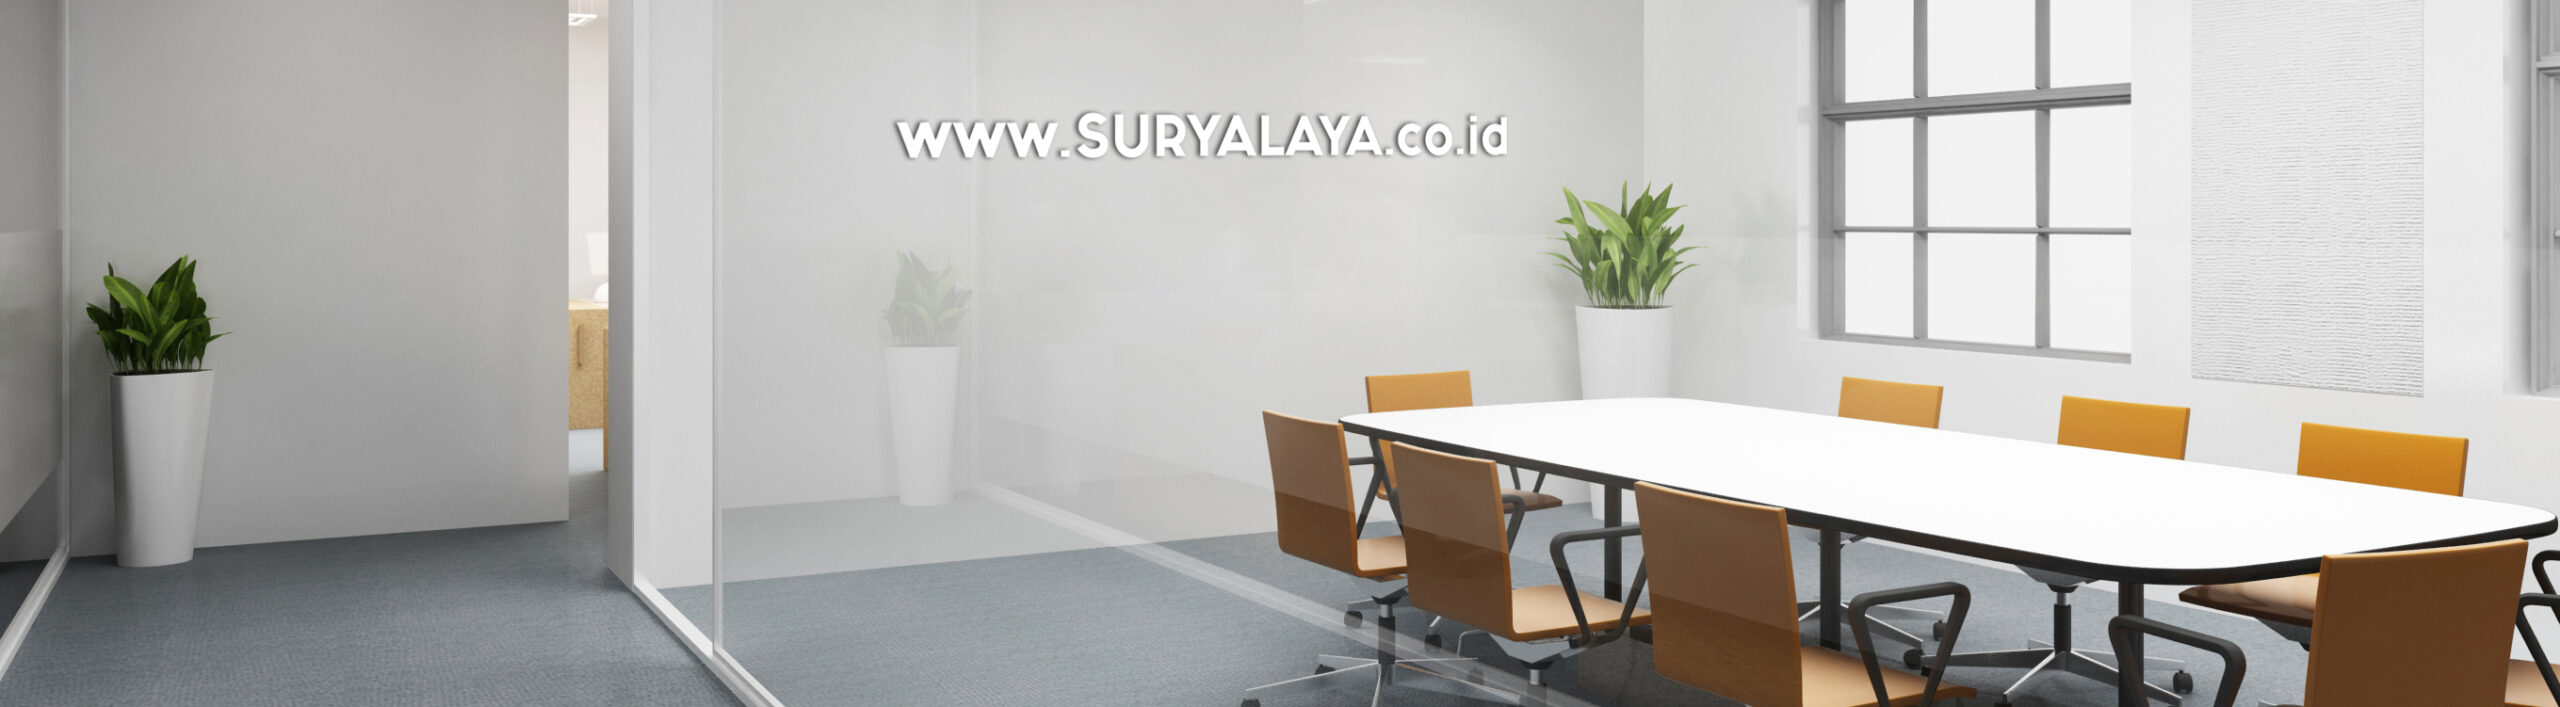 Suryalaya Company